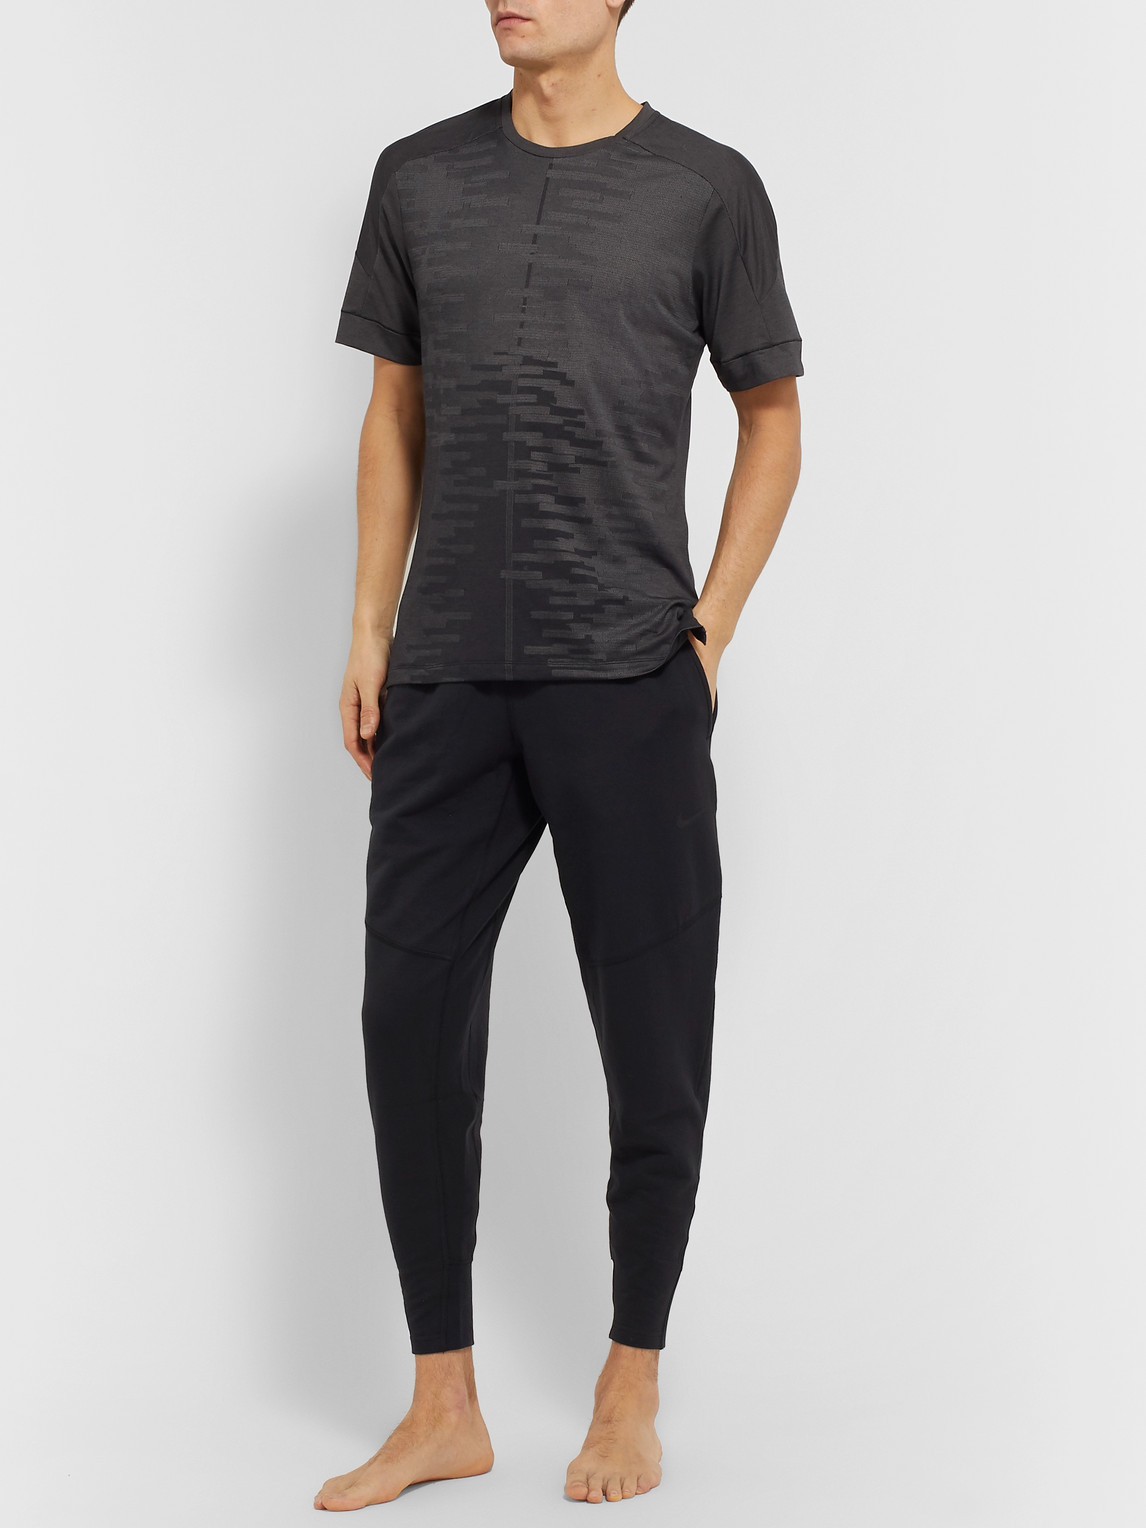 Nike Jacquard Dri-fit Yoga T-shirt In Grey